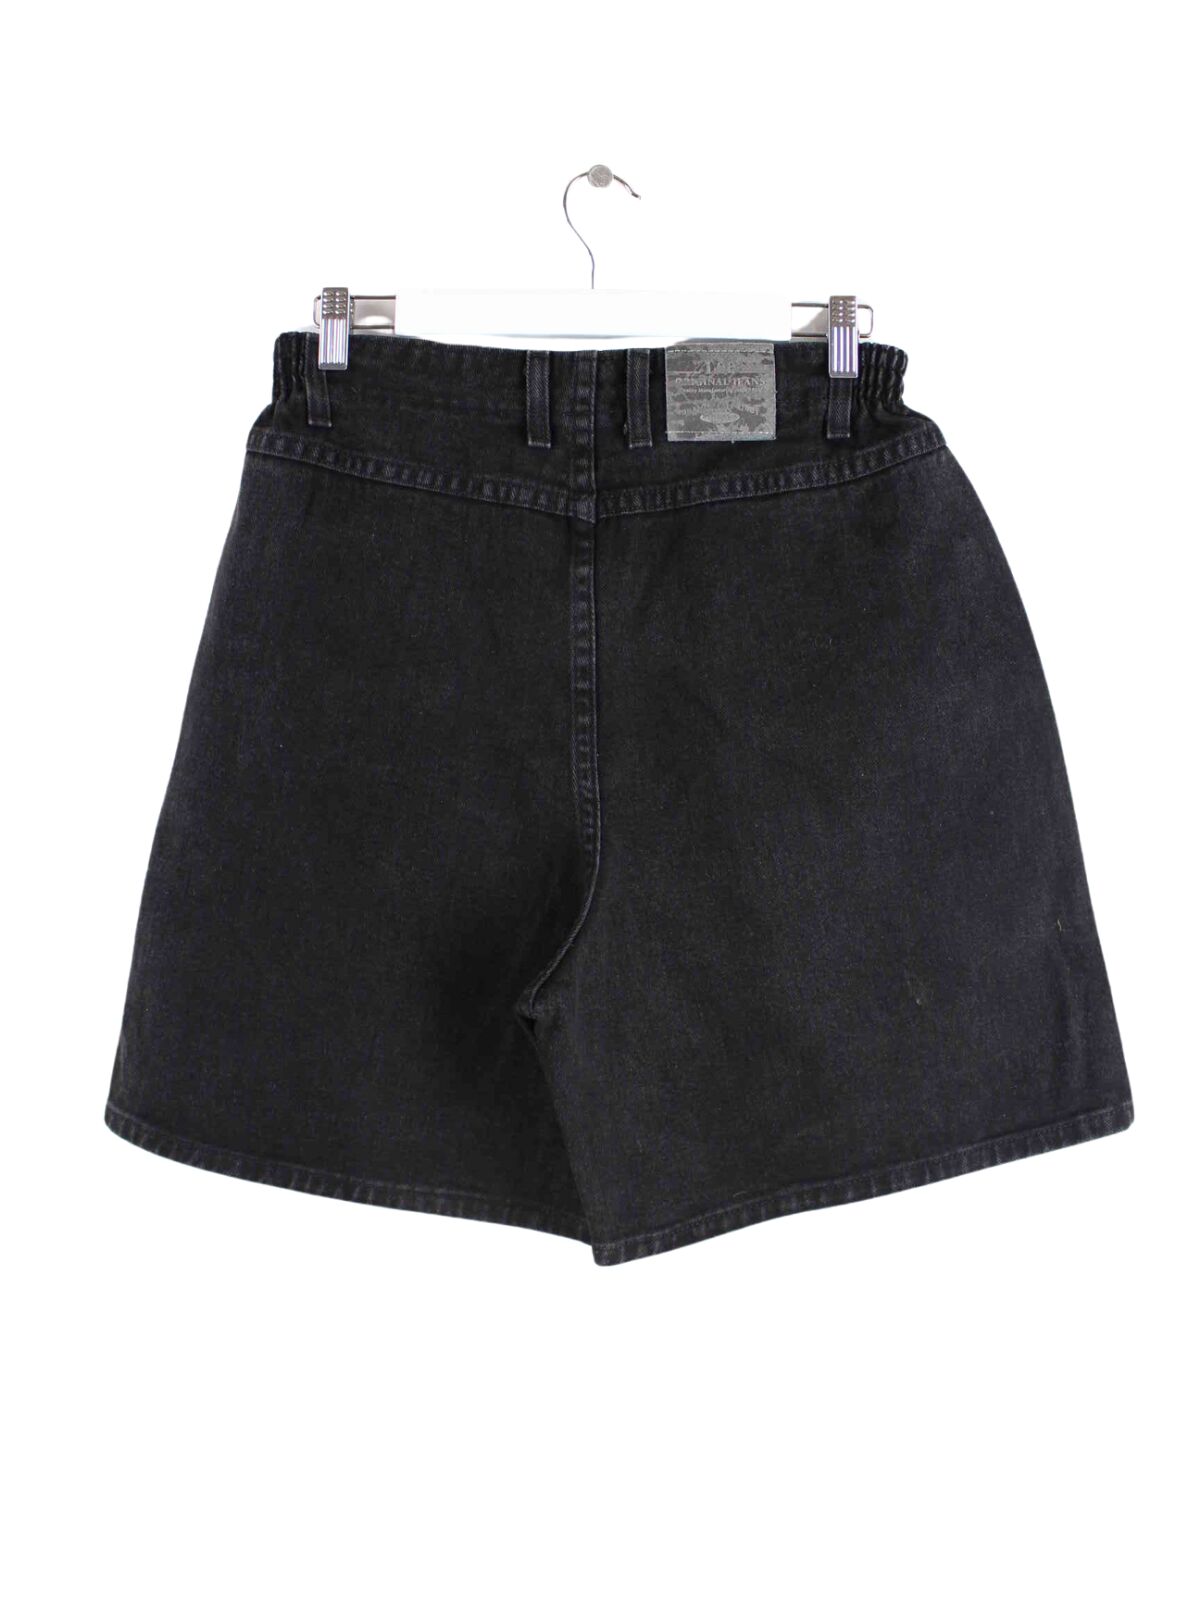 Lee Damen 90s Jeans Shorts Schwarz W30 (back image)